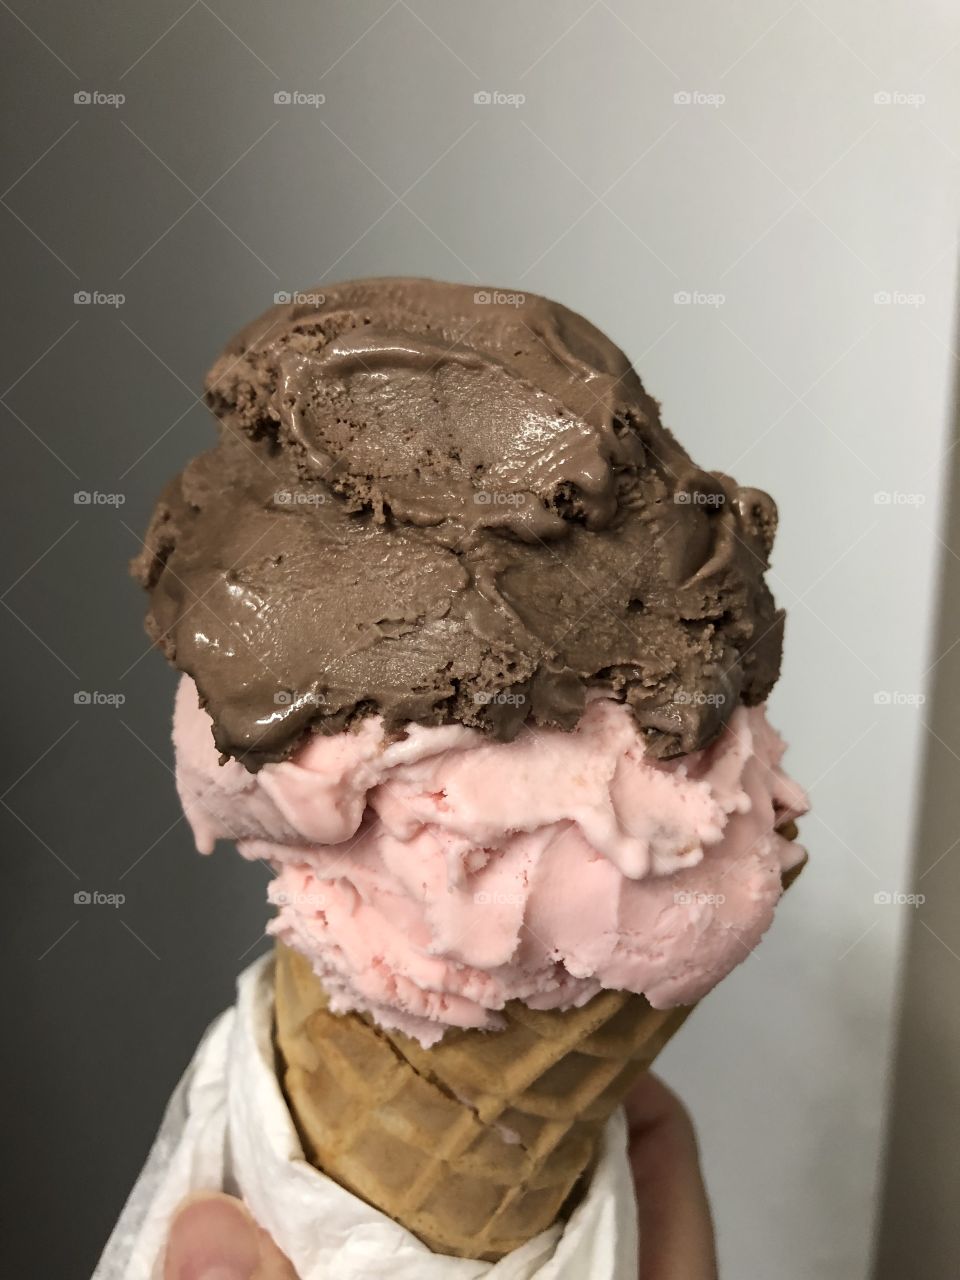 Chocolate & strawberry & cream - ice cream in waffle cone